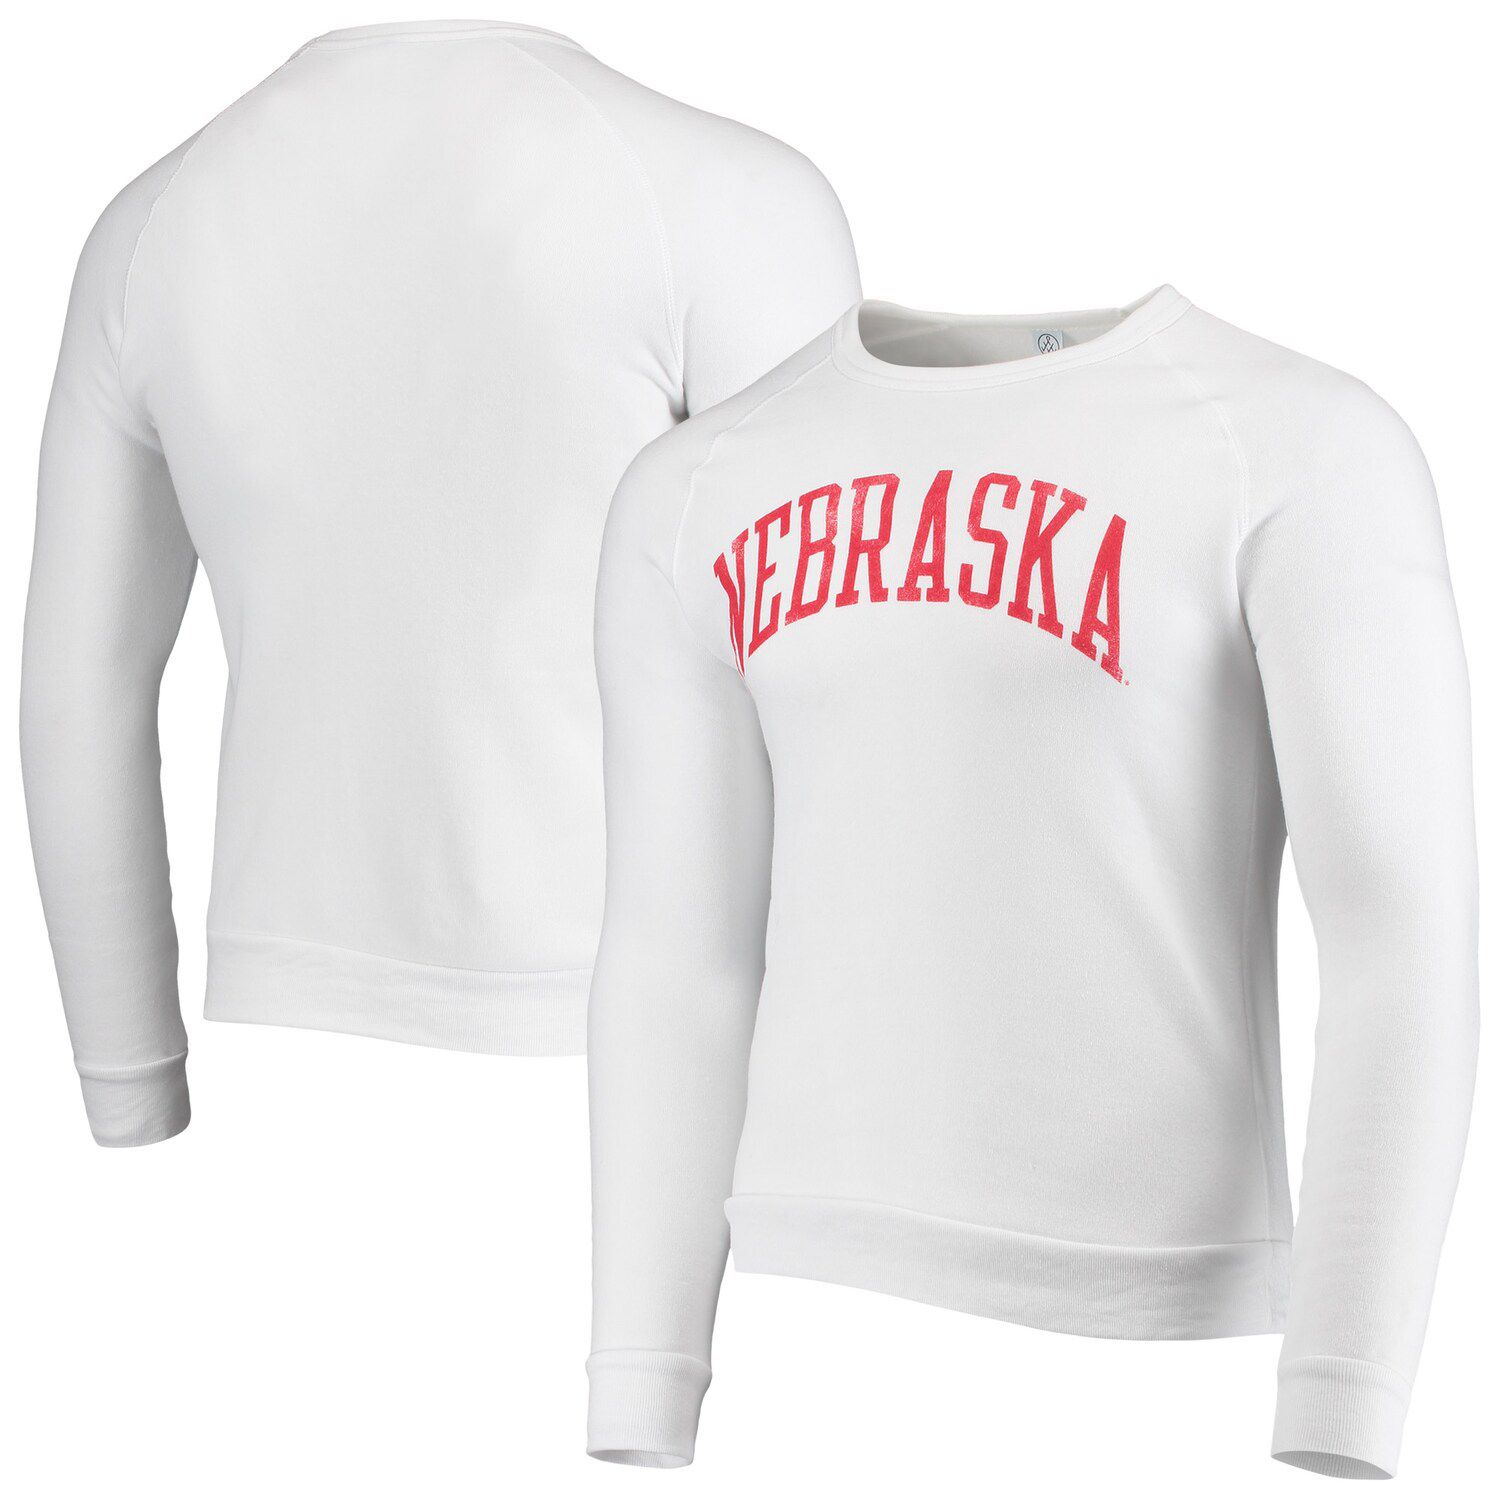 Image for Unbranded Men's Alternative Apparel White Nebraska Huskers The Champ Tri-Blend Raglan Pullover Sweatshirt at Kohl's.